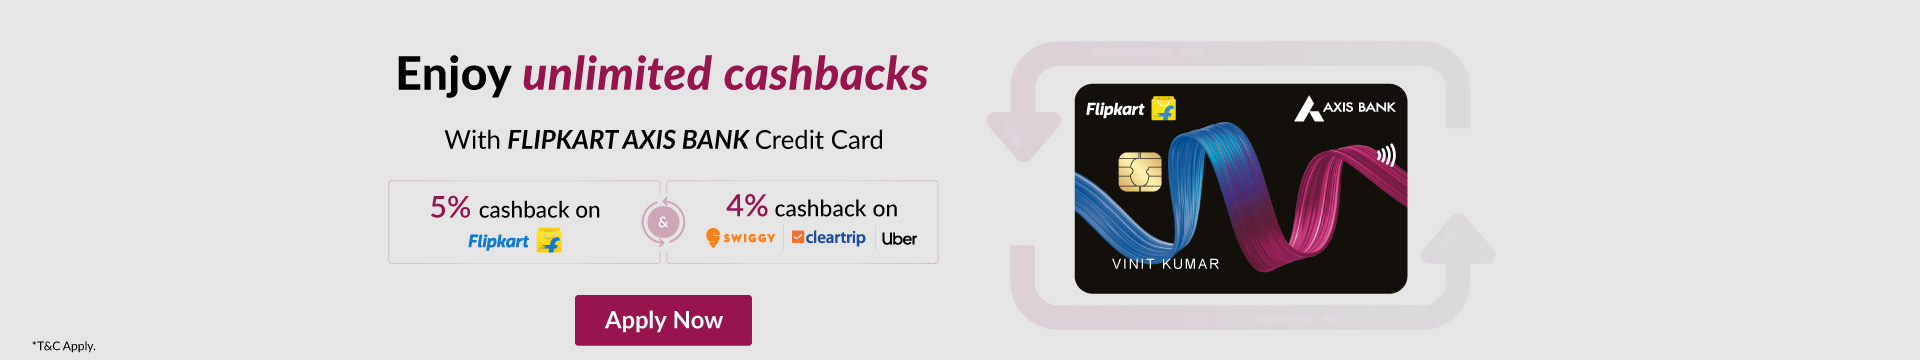 flipkart credit card banner